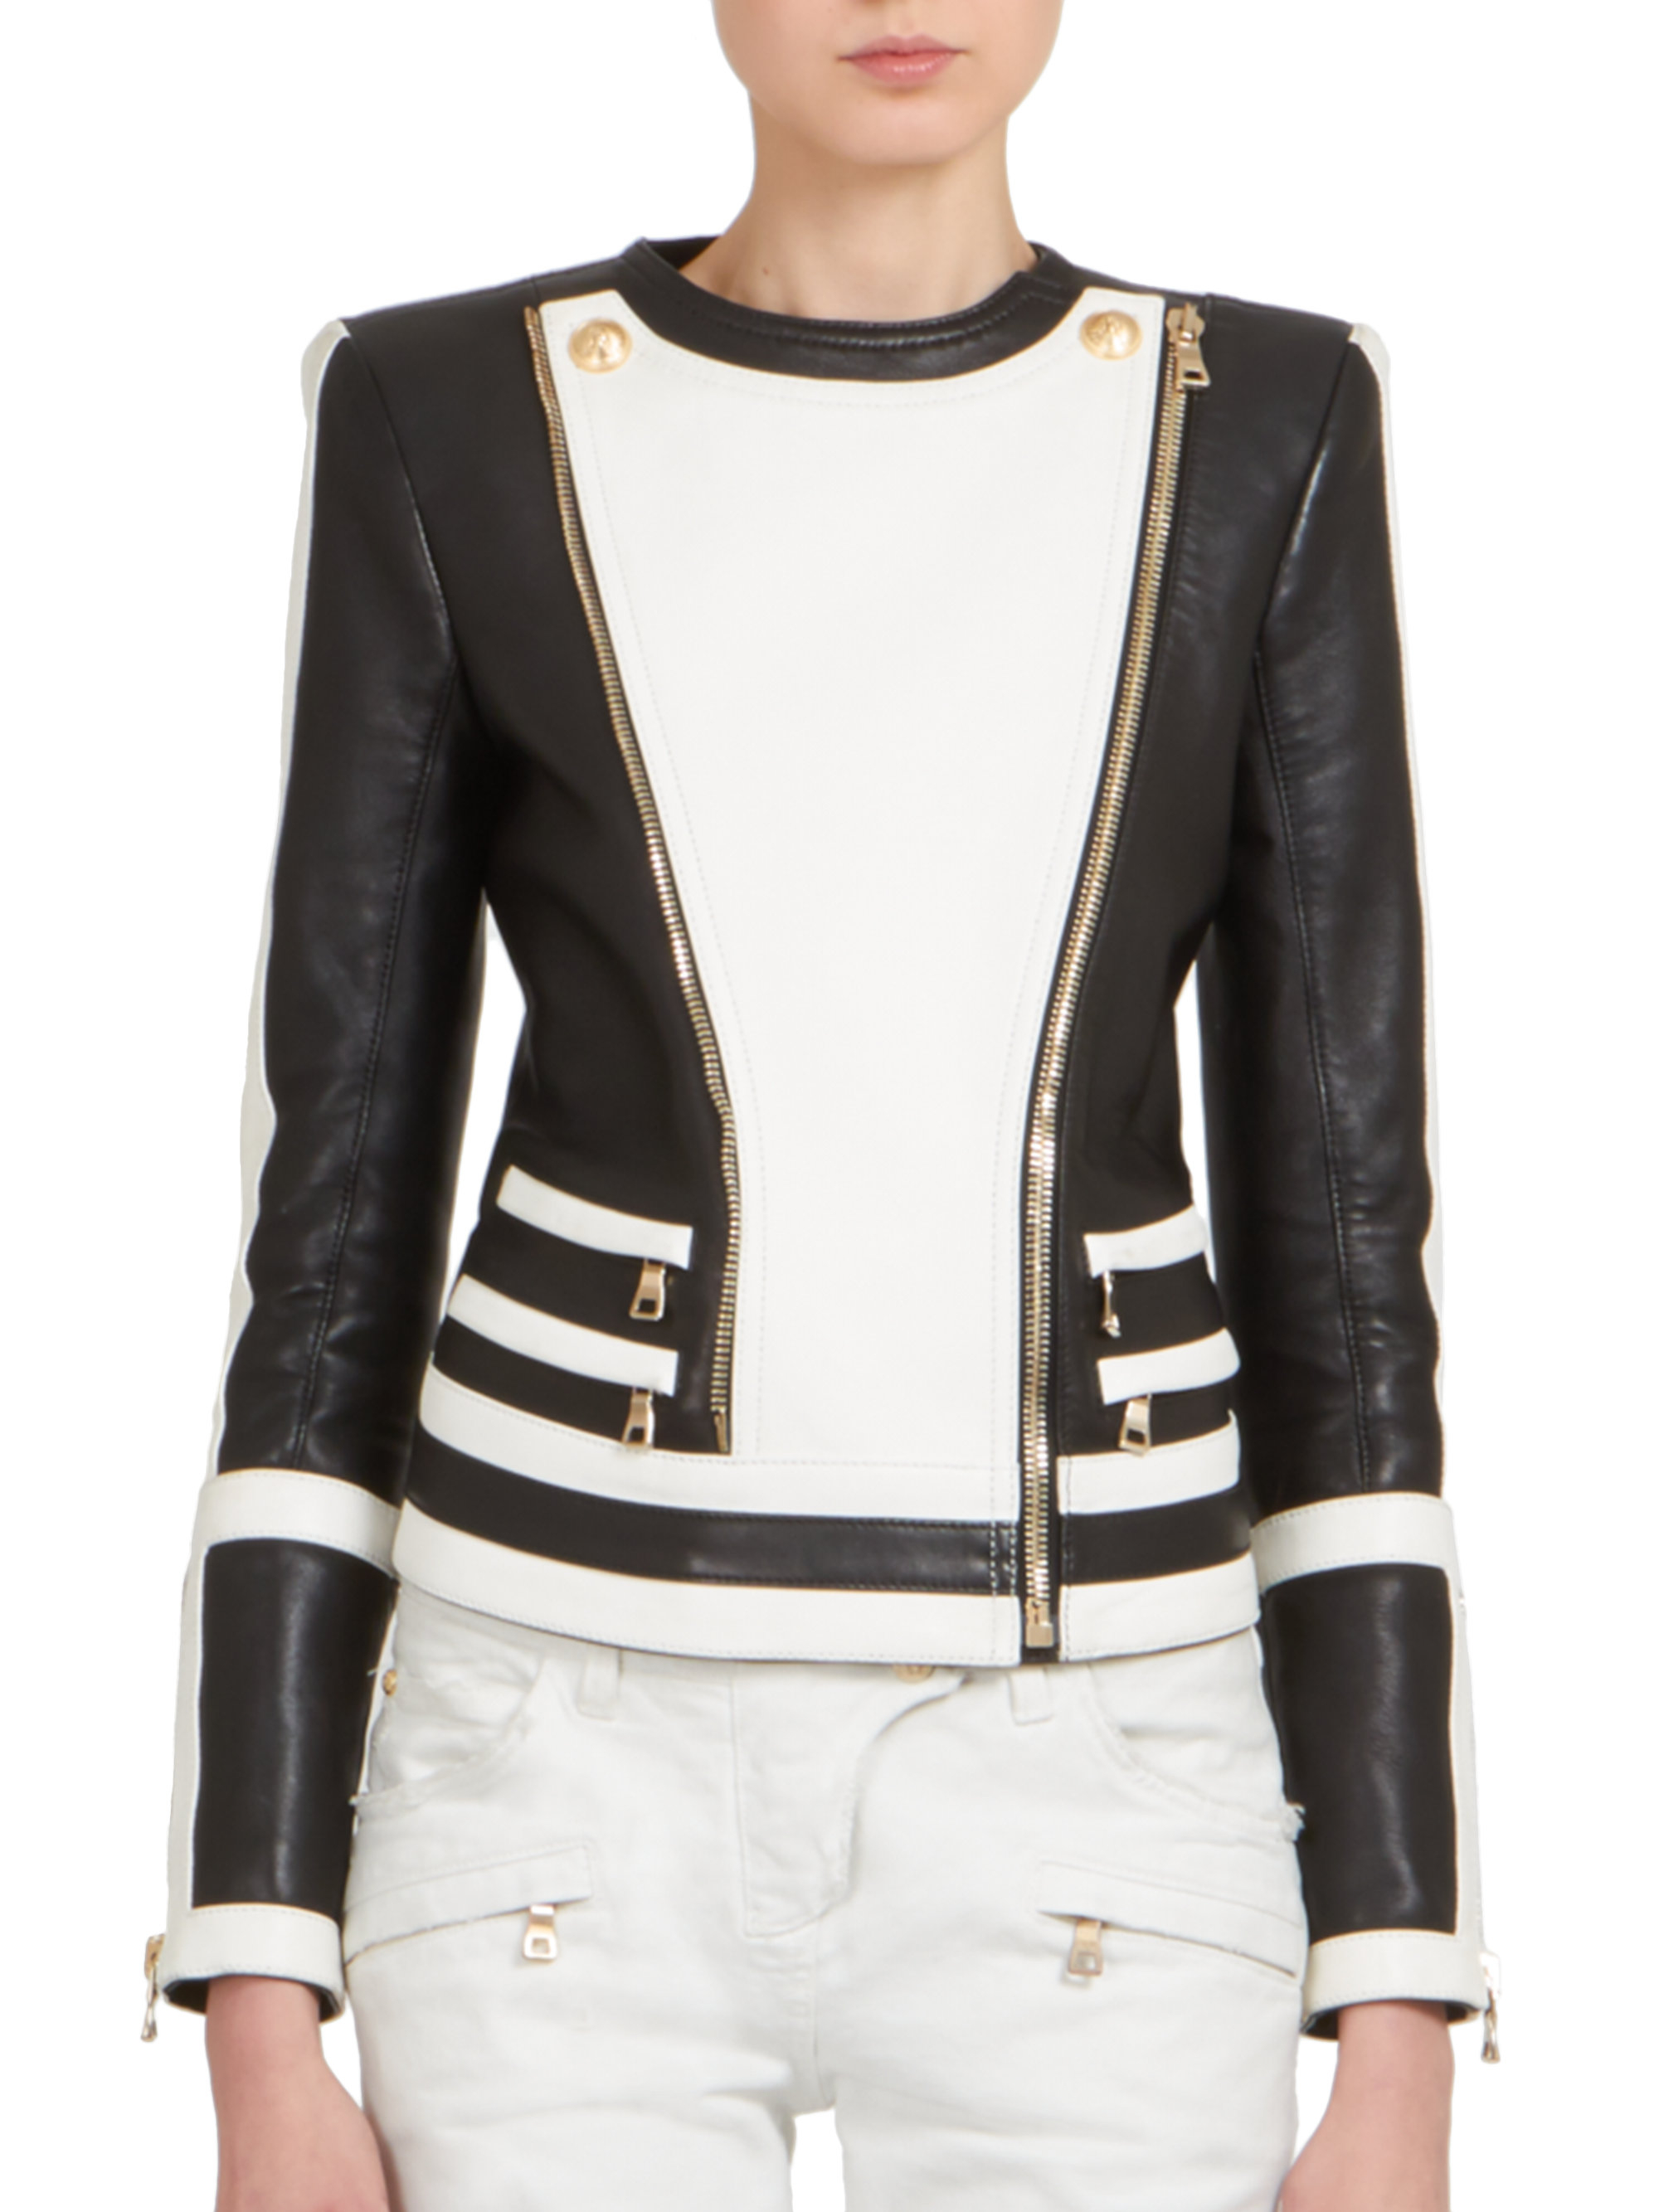 Balmain Bicolor Leather Moto Jacket in Black White (Black) - Lyst